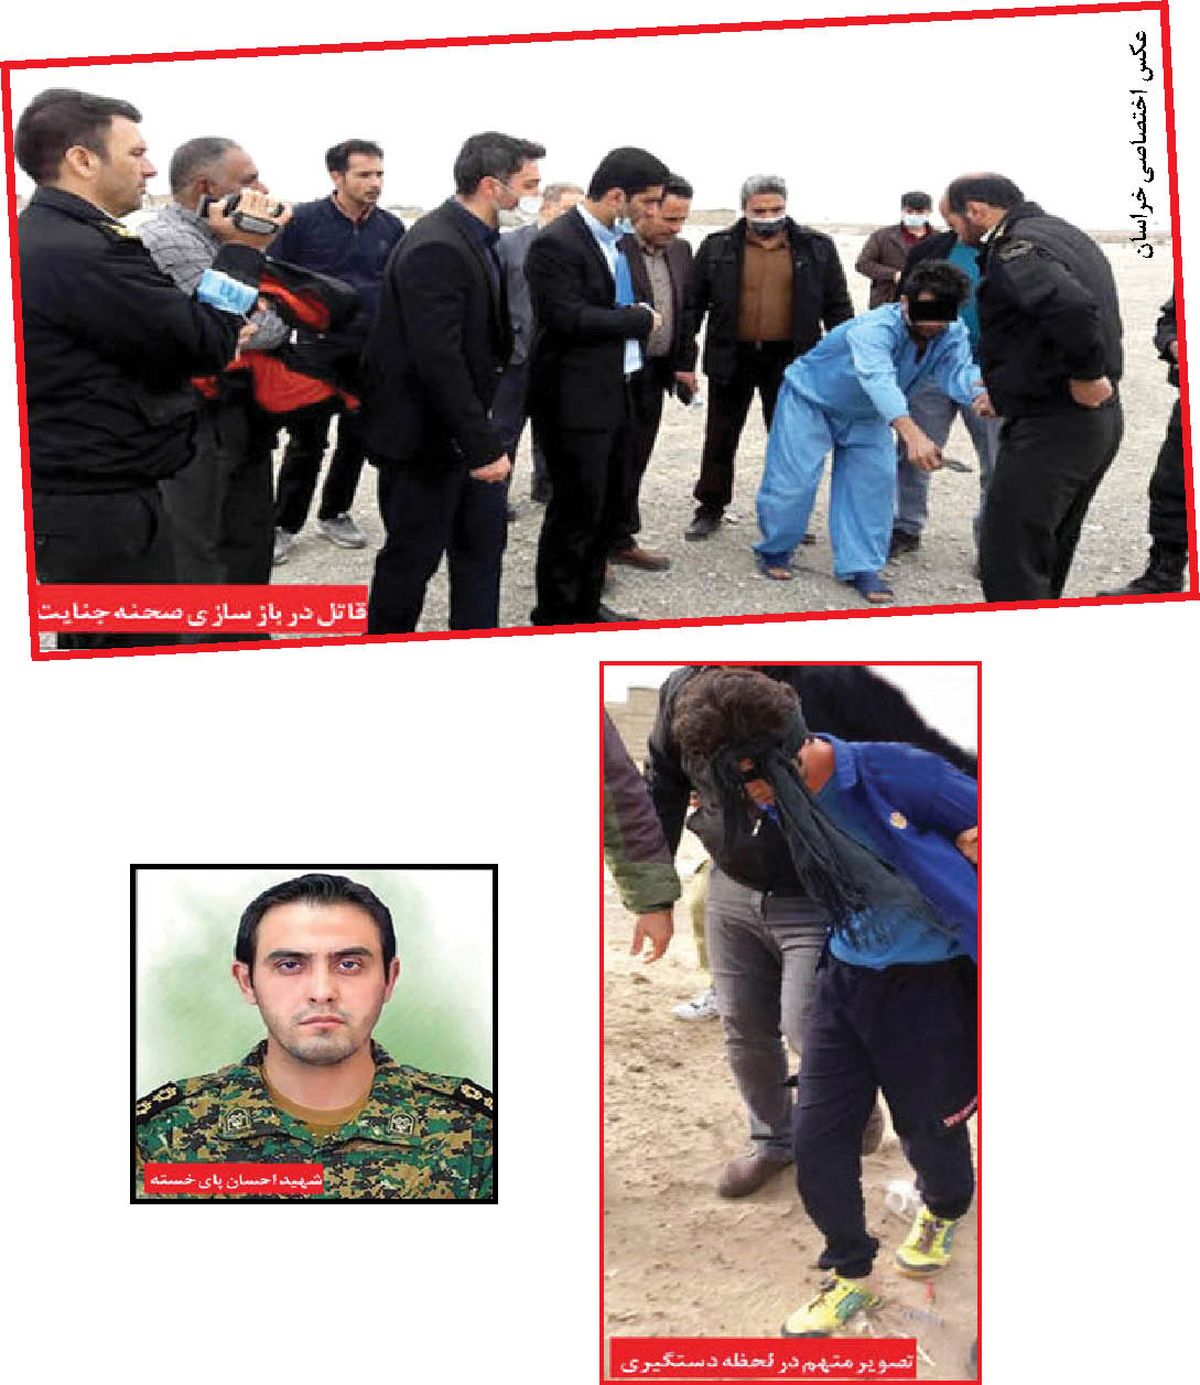 حکم قصاص قاتل مامور پلیس در مشهد اجرا شد + عکس